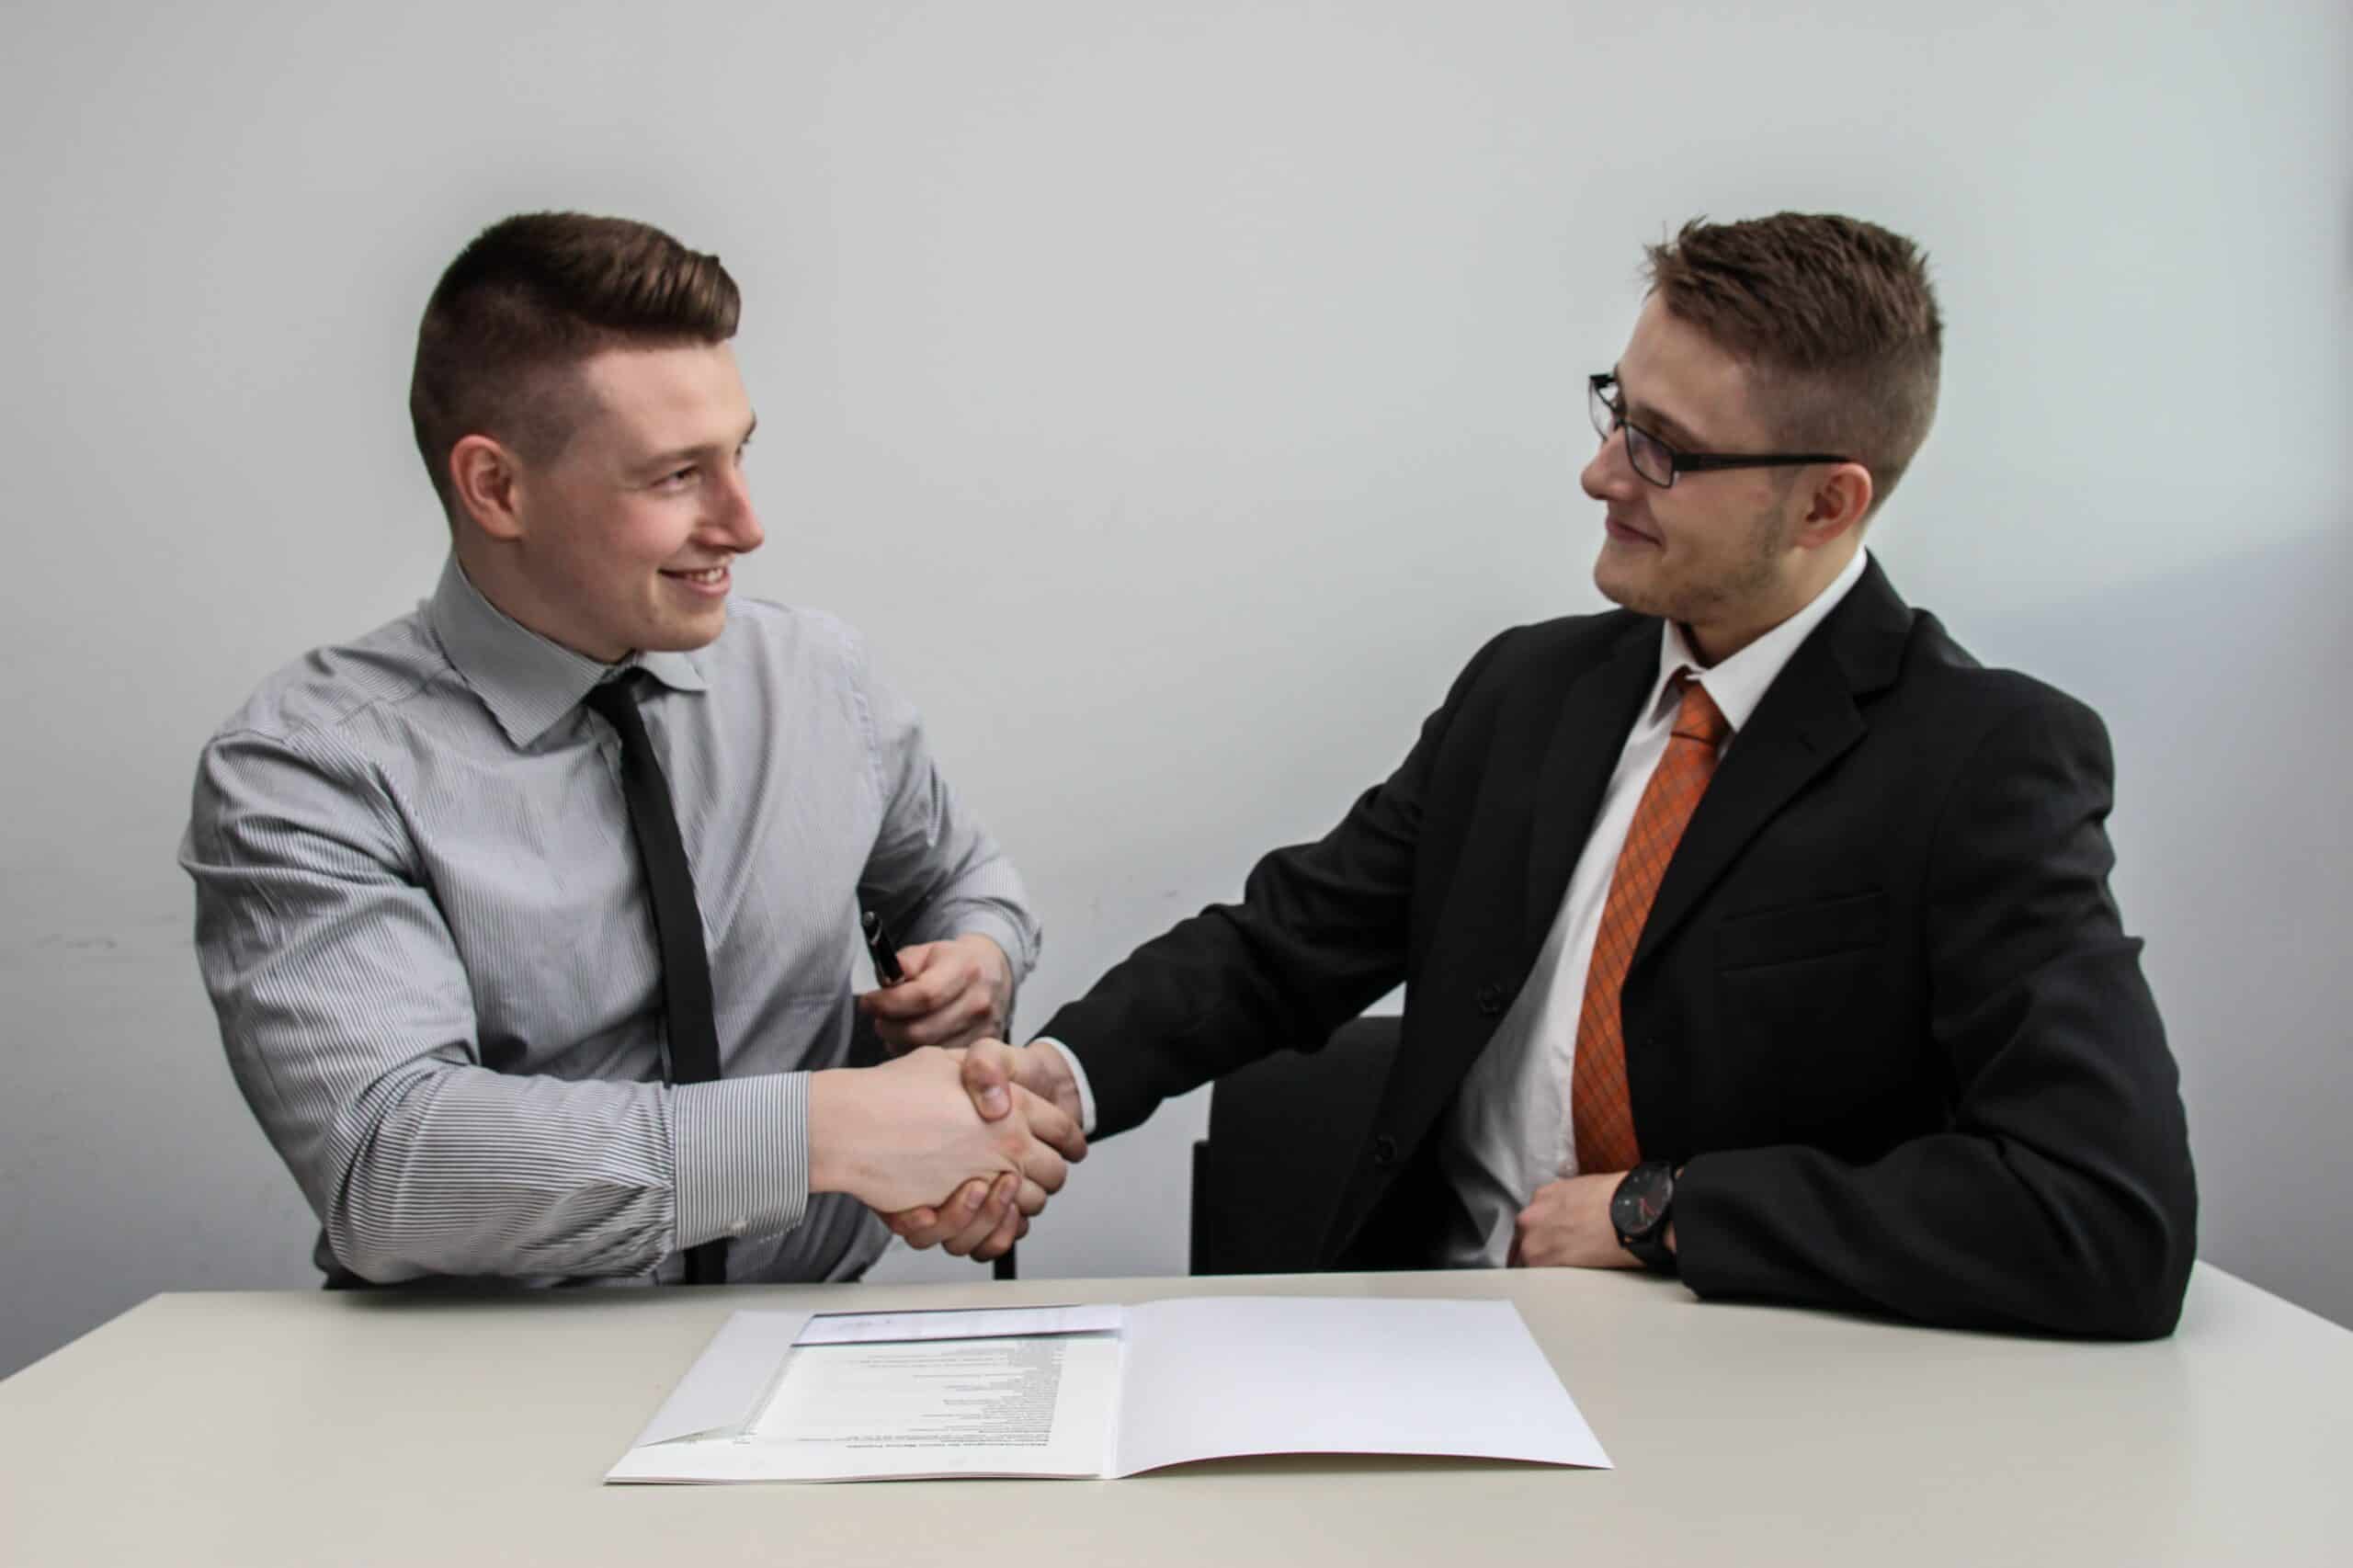 Men in business suits shaking hands.